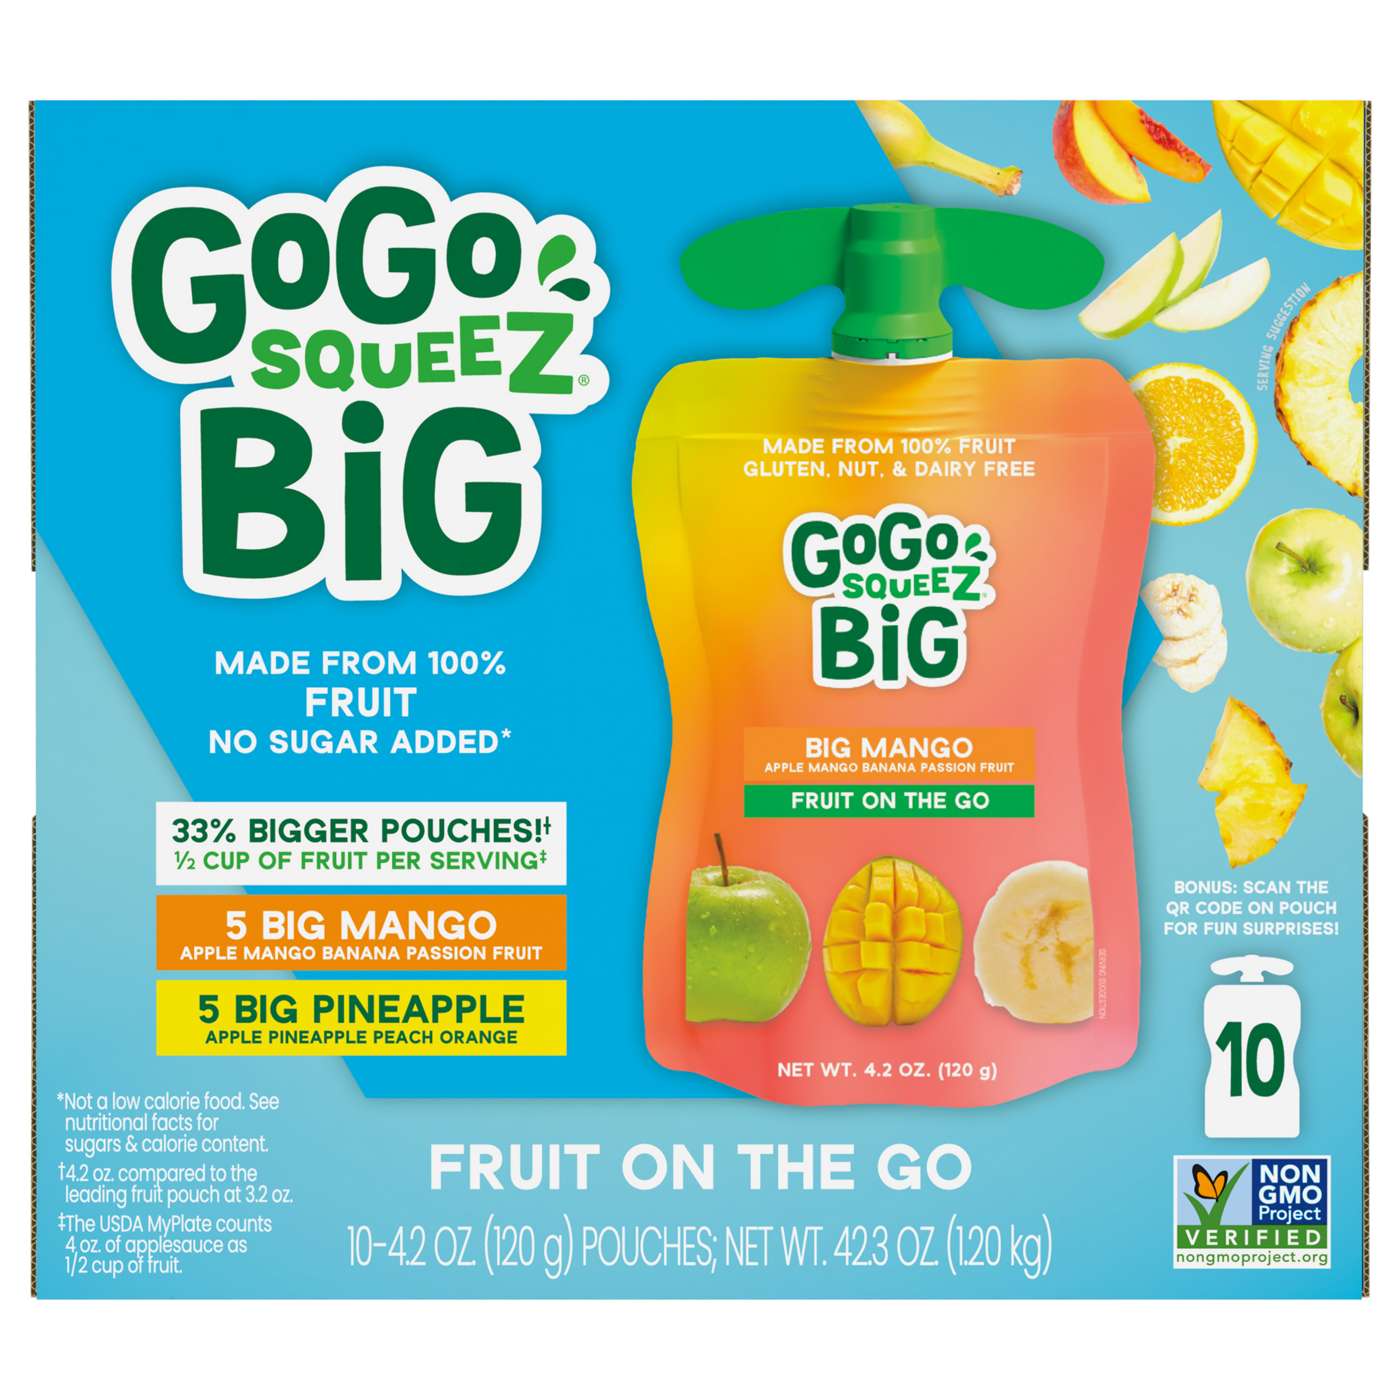 GoGo squeeZ Big Mango and Pineapple Fruit on the Go; image 5 of 5